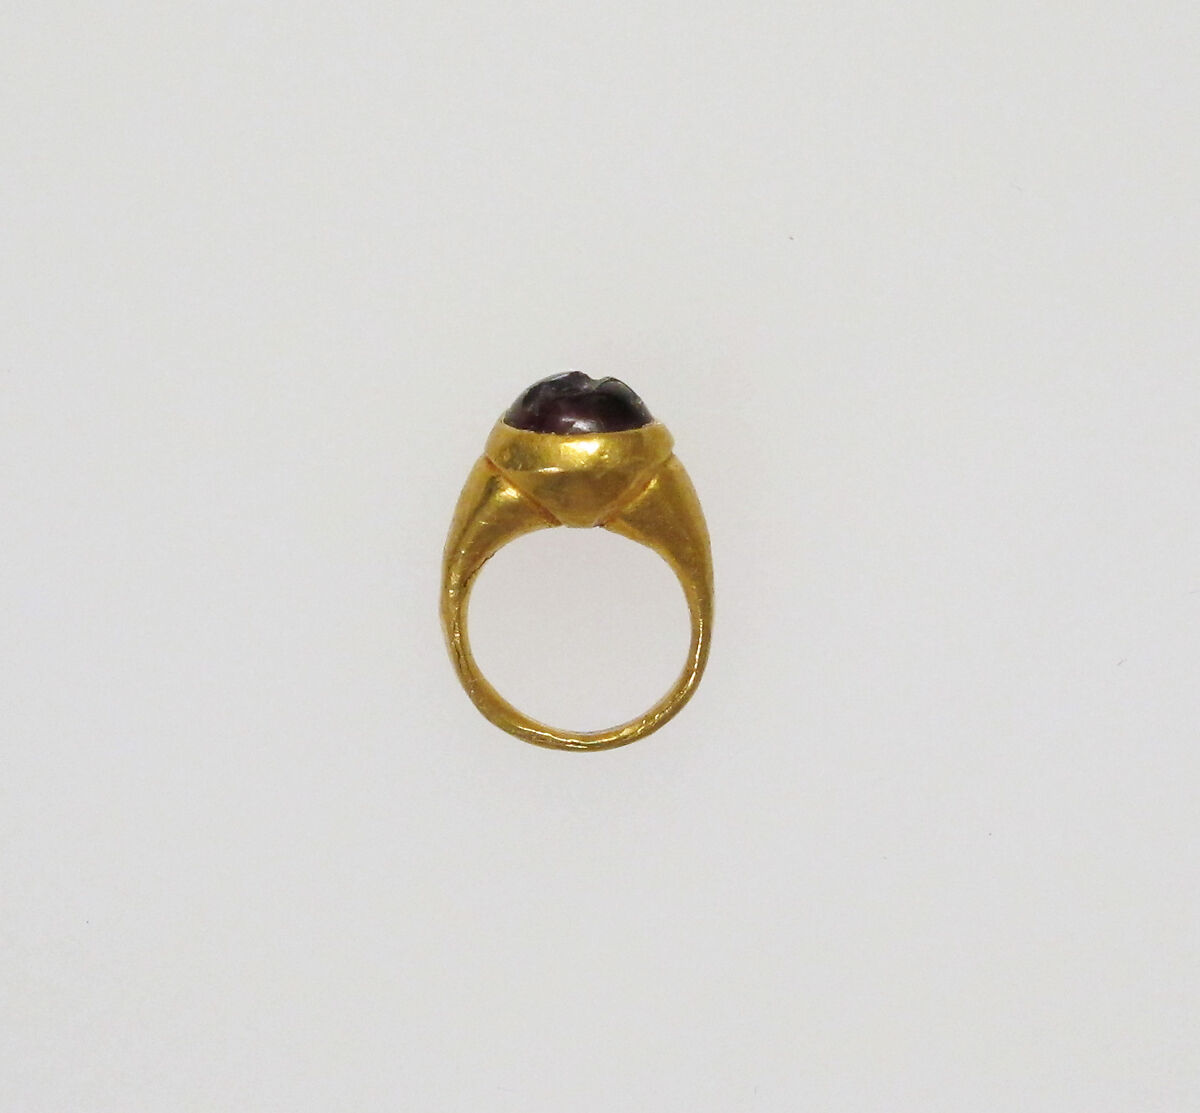 Ring with intaglio of a bird, Gold, garnet, Roman 